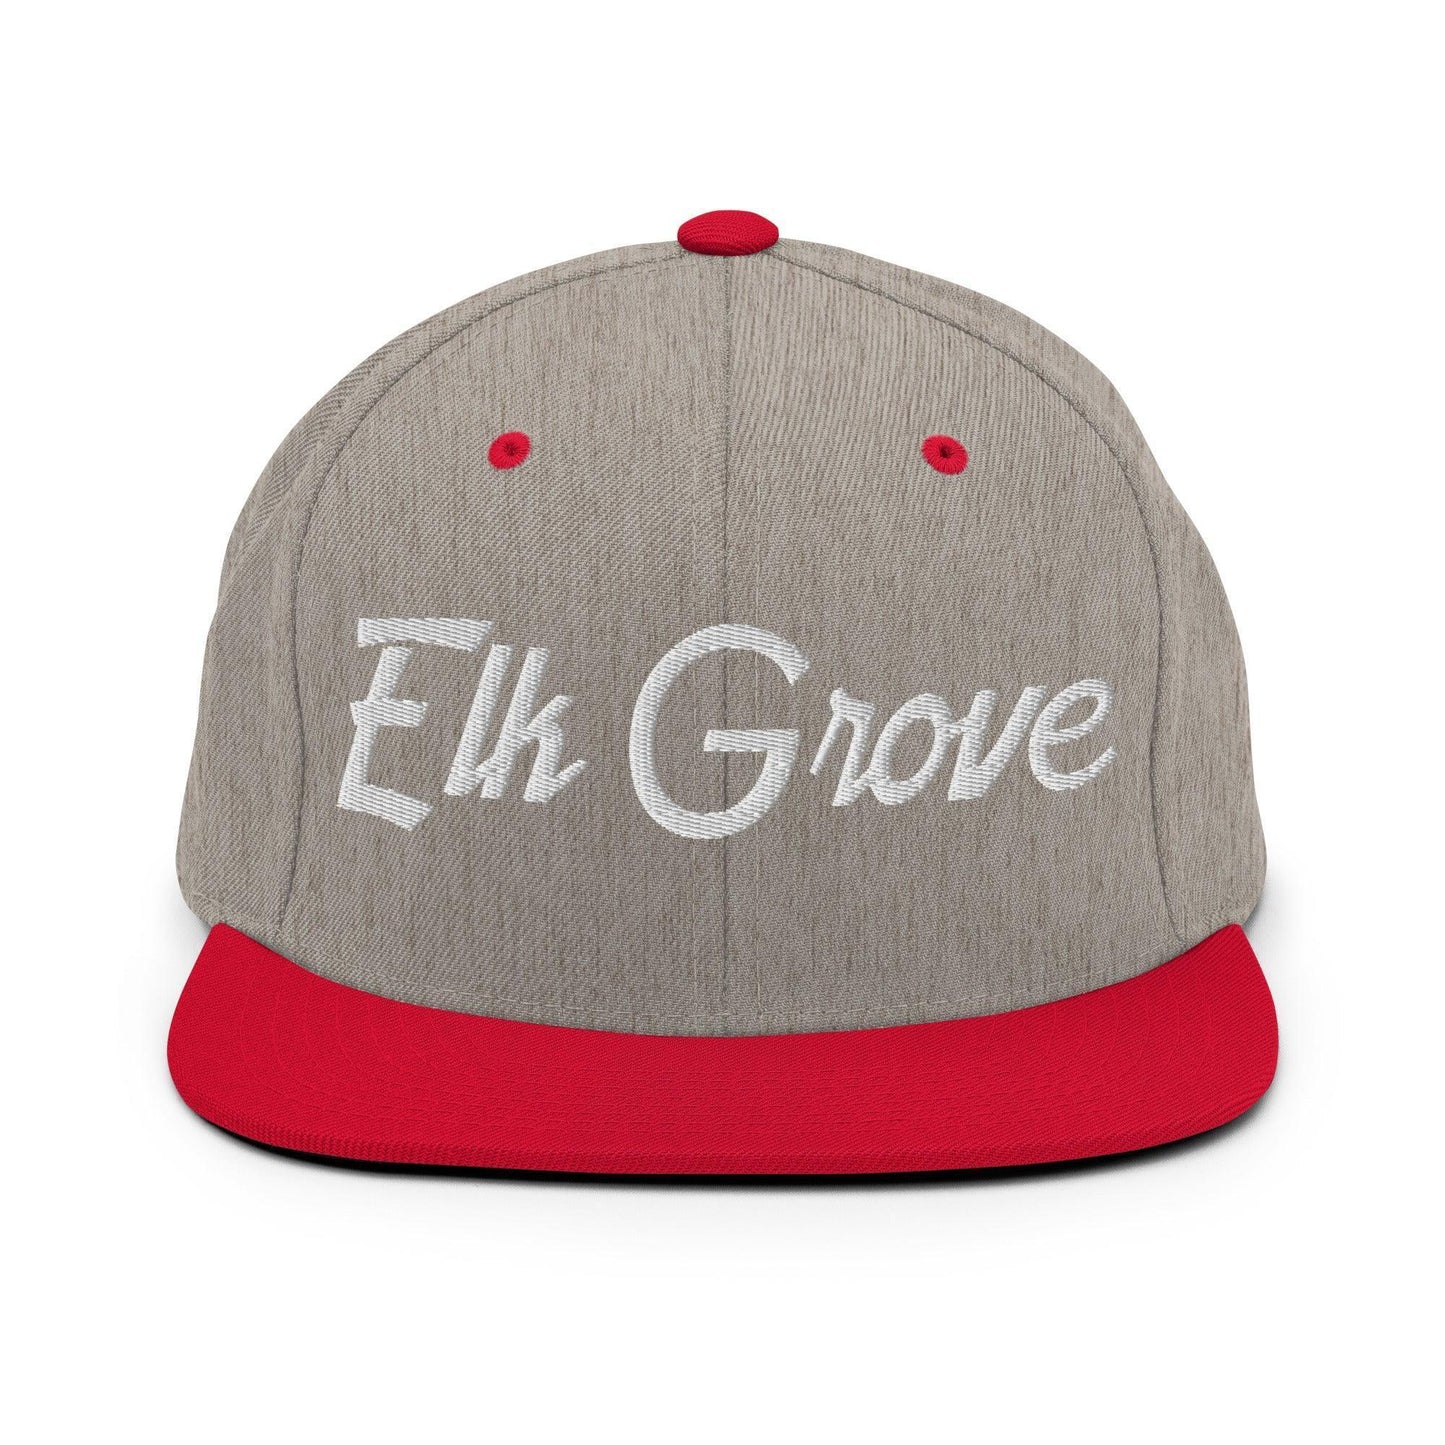 Elk Grove Script Snapback Hat Heather Grey/ Red